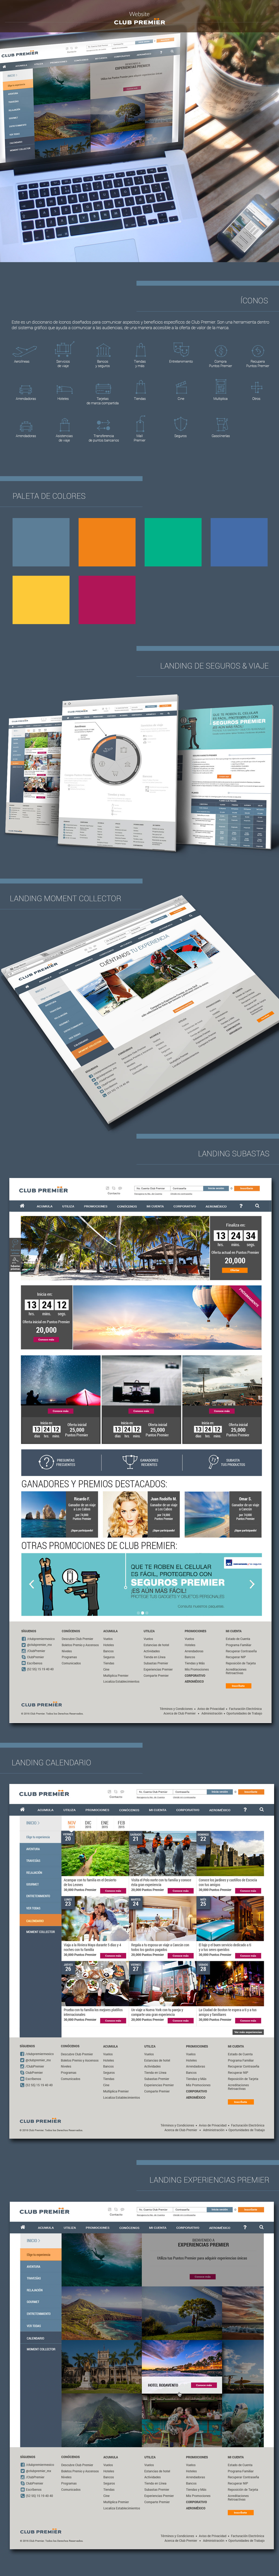 Club Premier Aeromexico landingpage Website ux